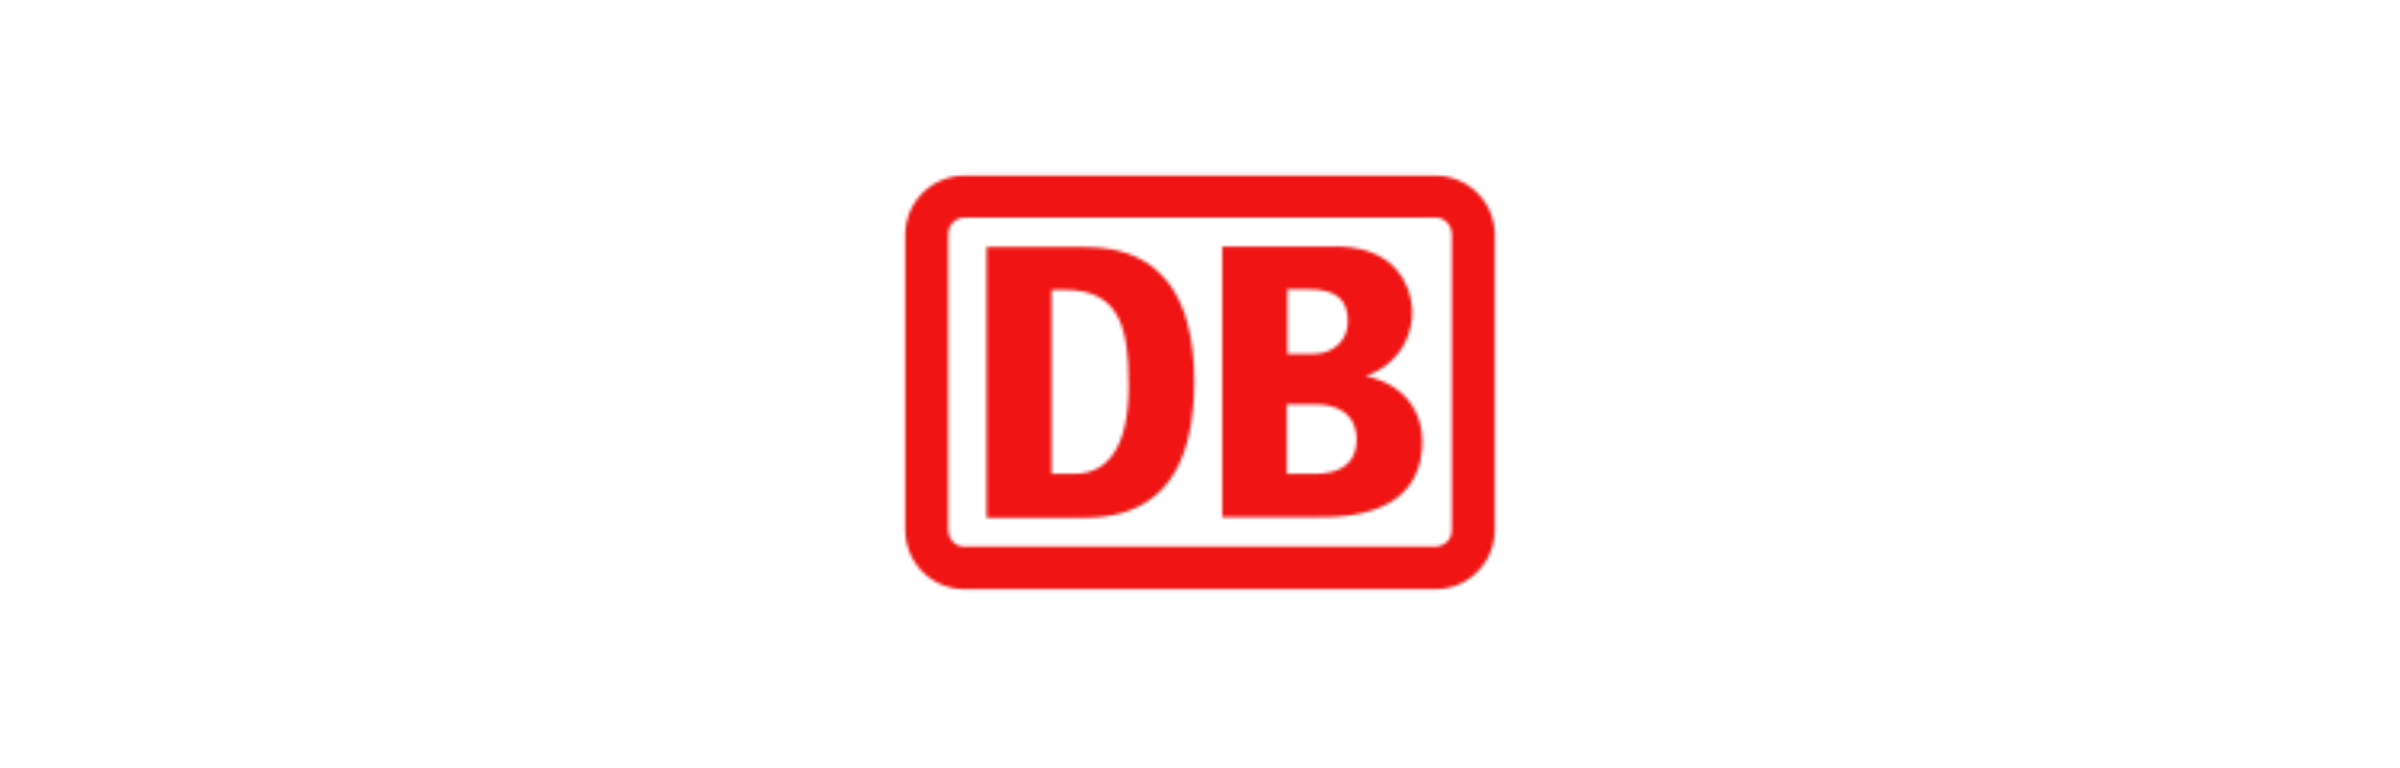 Logo JobRad-Arbeitgeber Deutsche Bahn